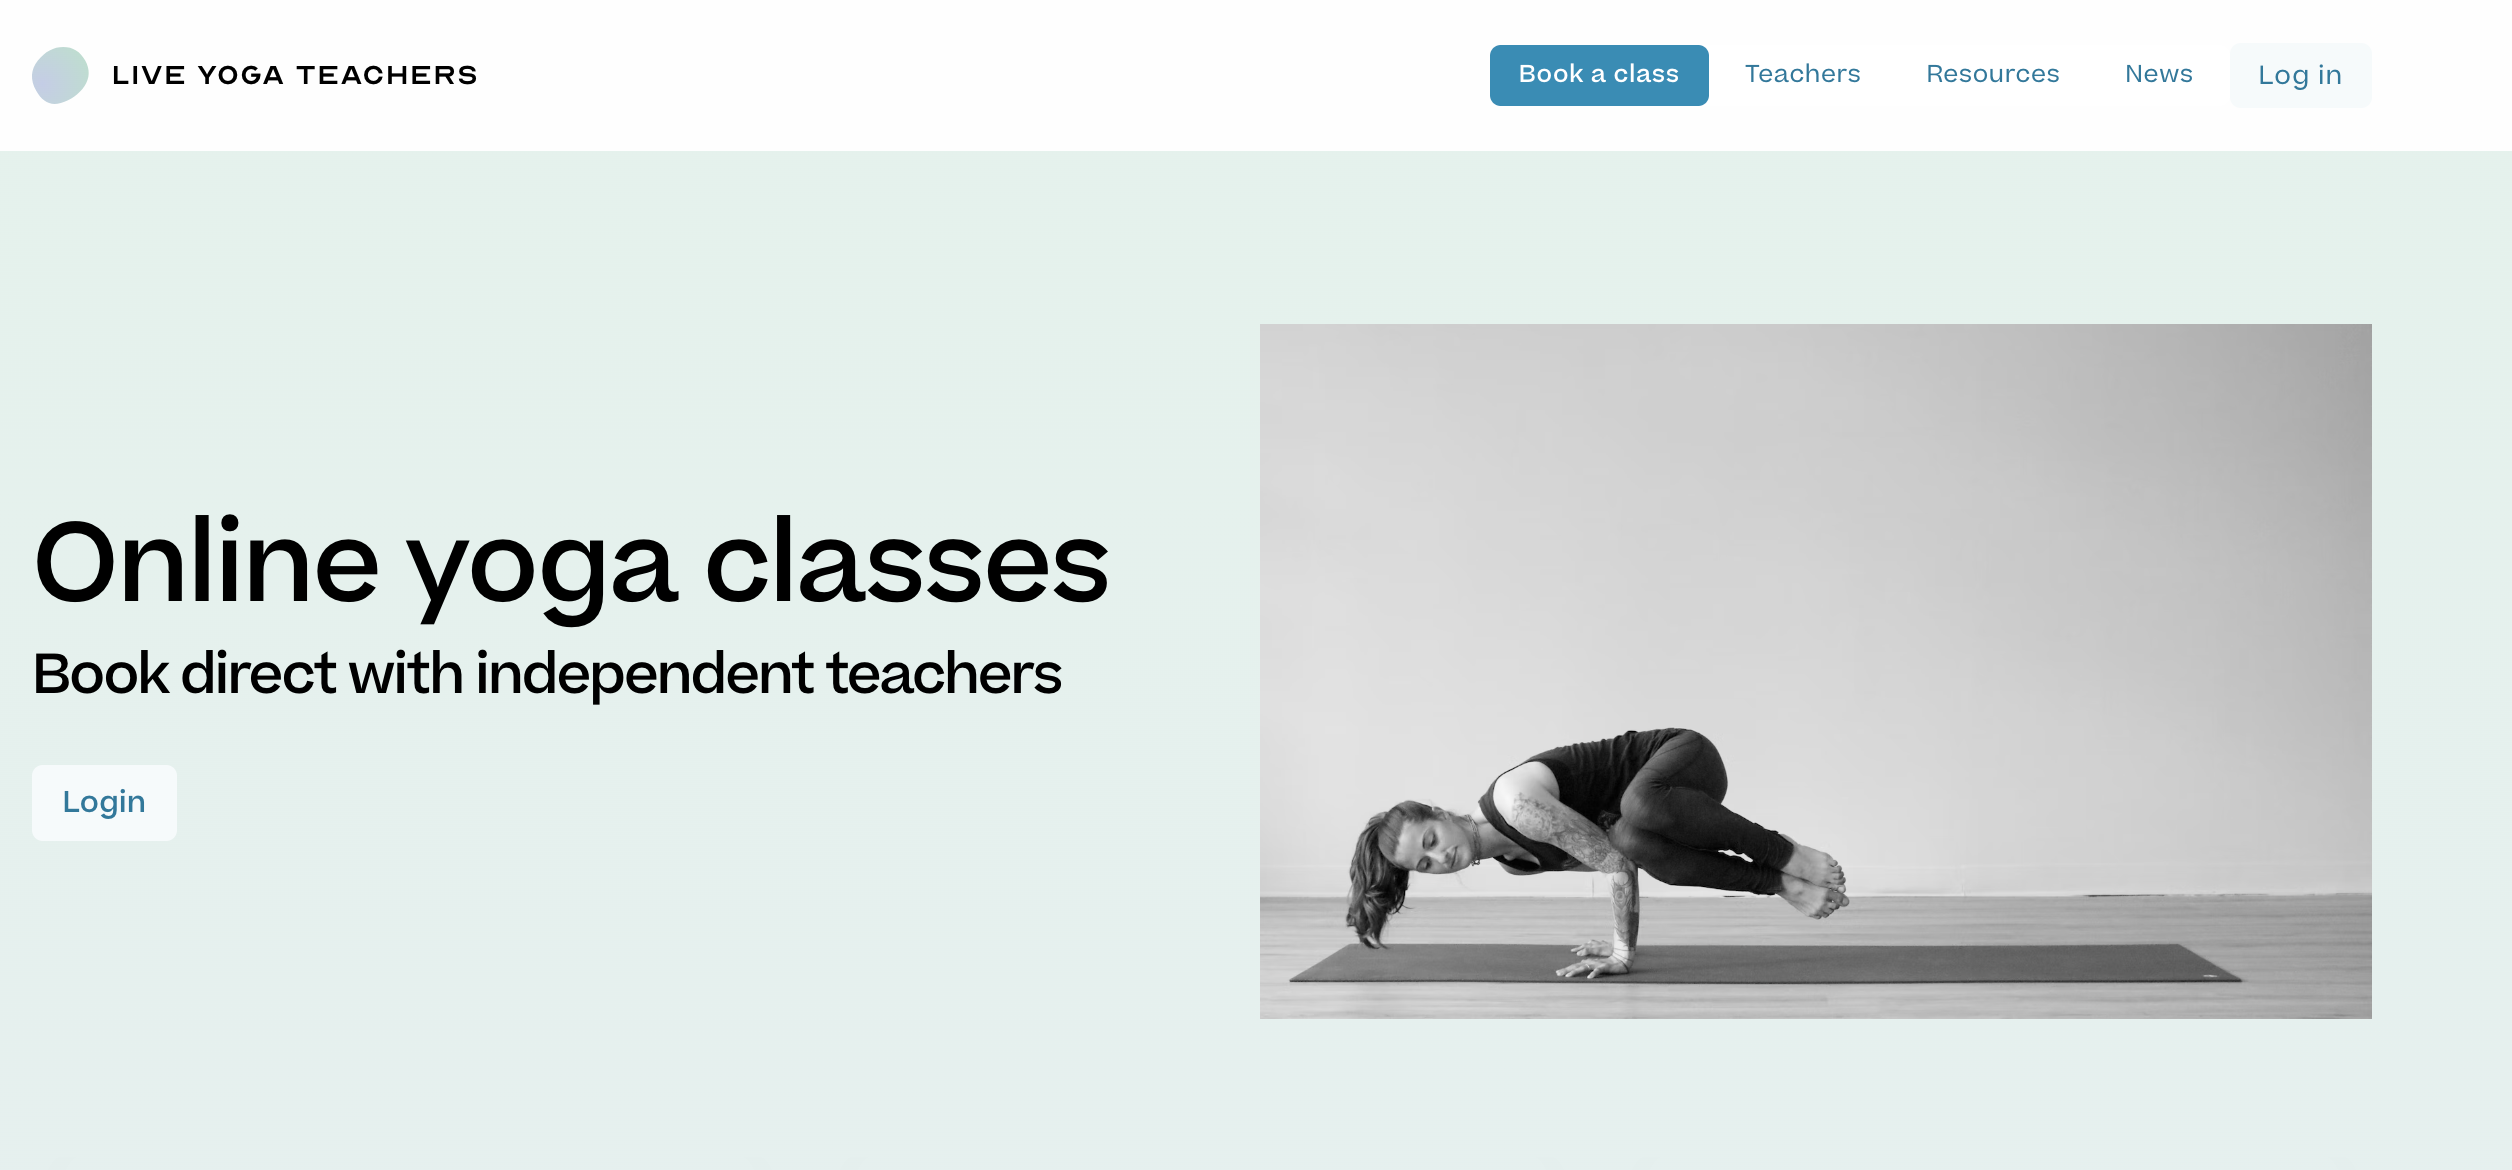 Live Yoga Teachers Landing page